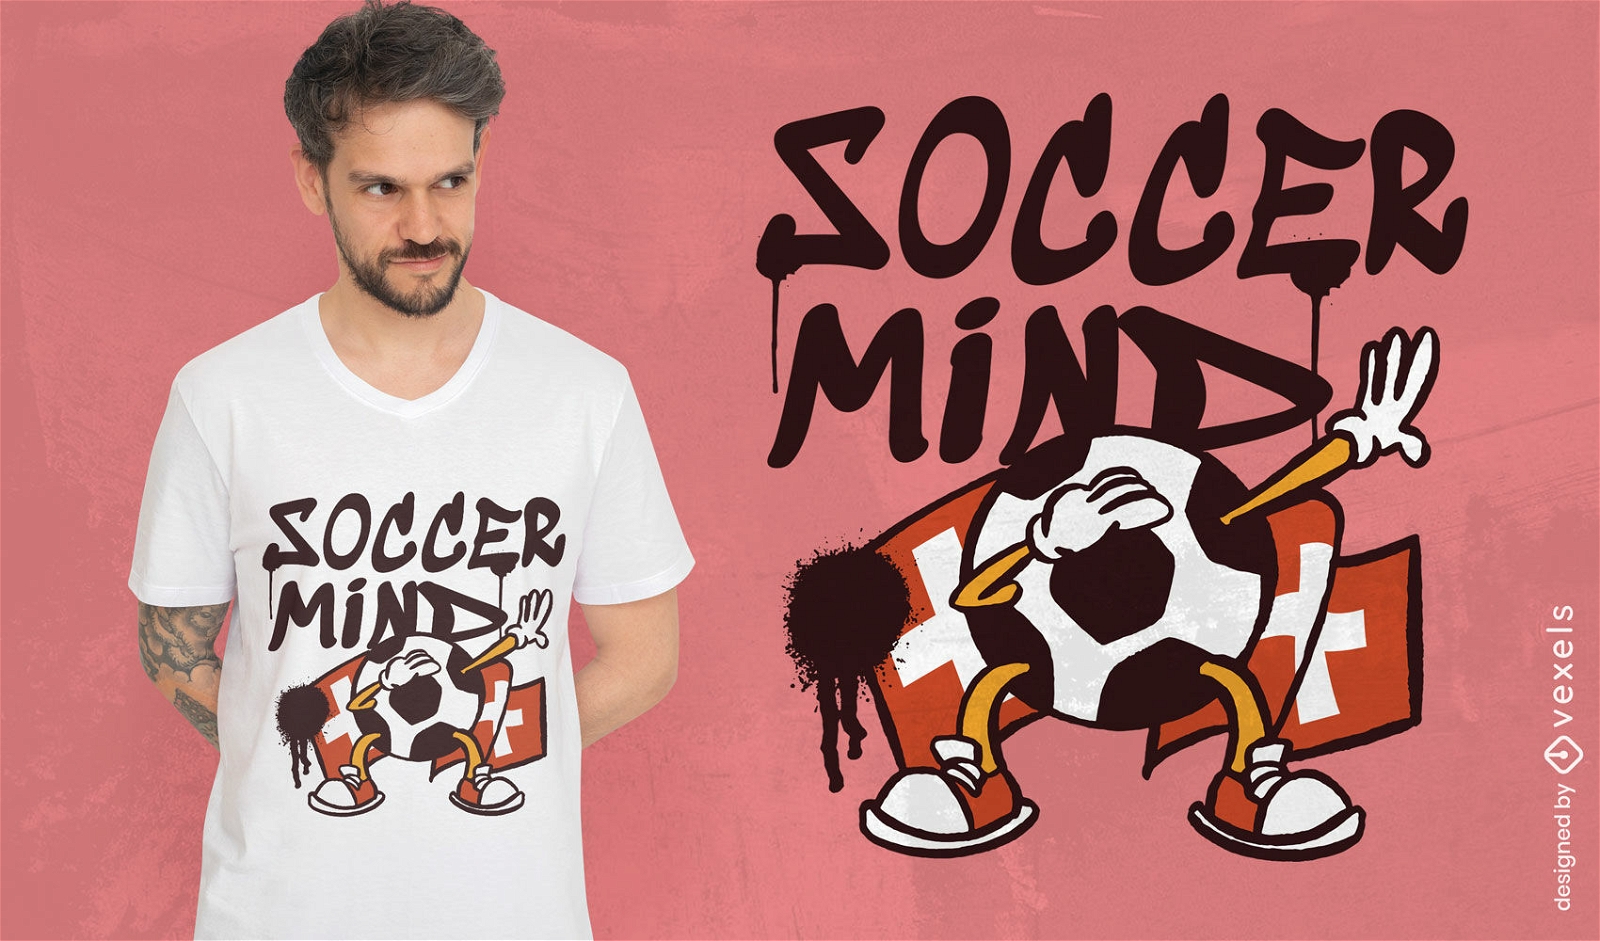 Football and switzerland flag t-shirt design